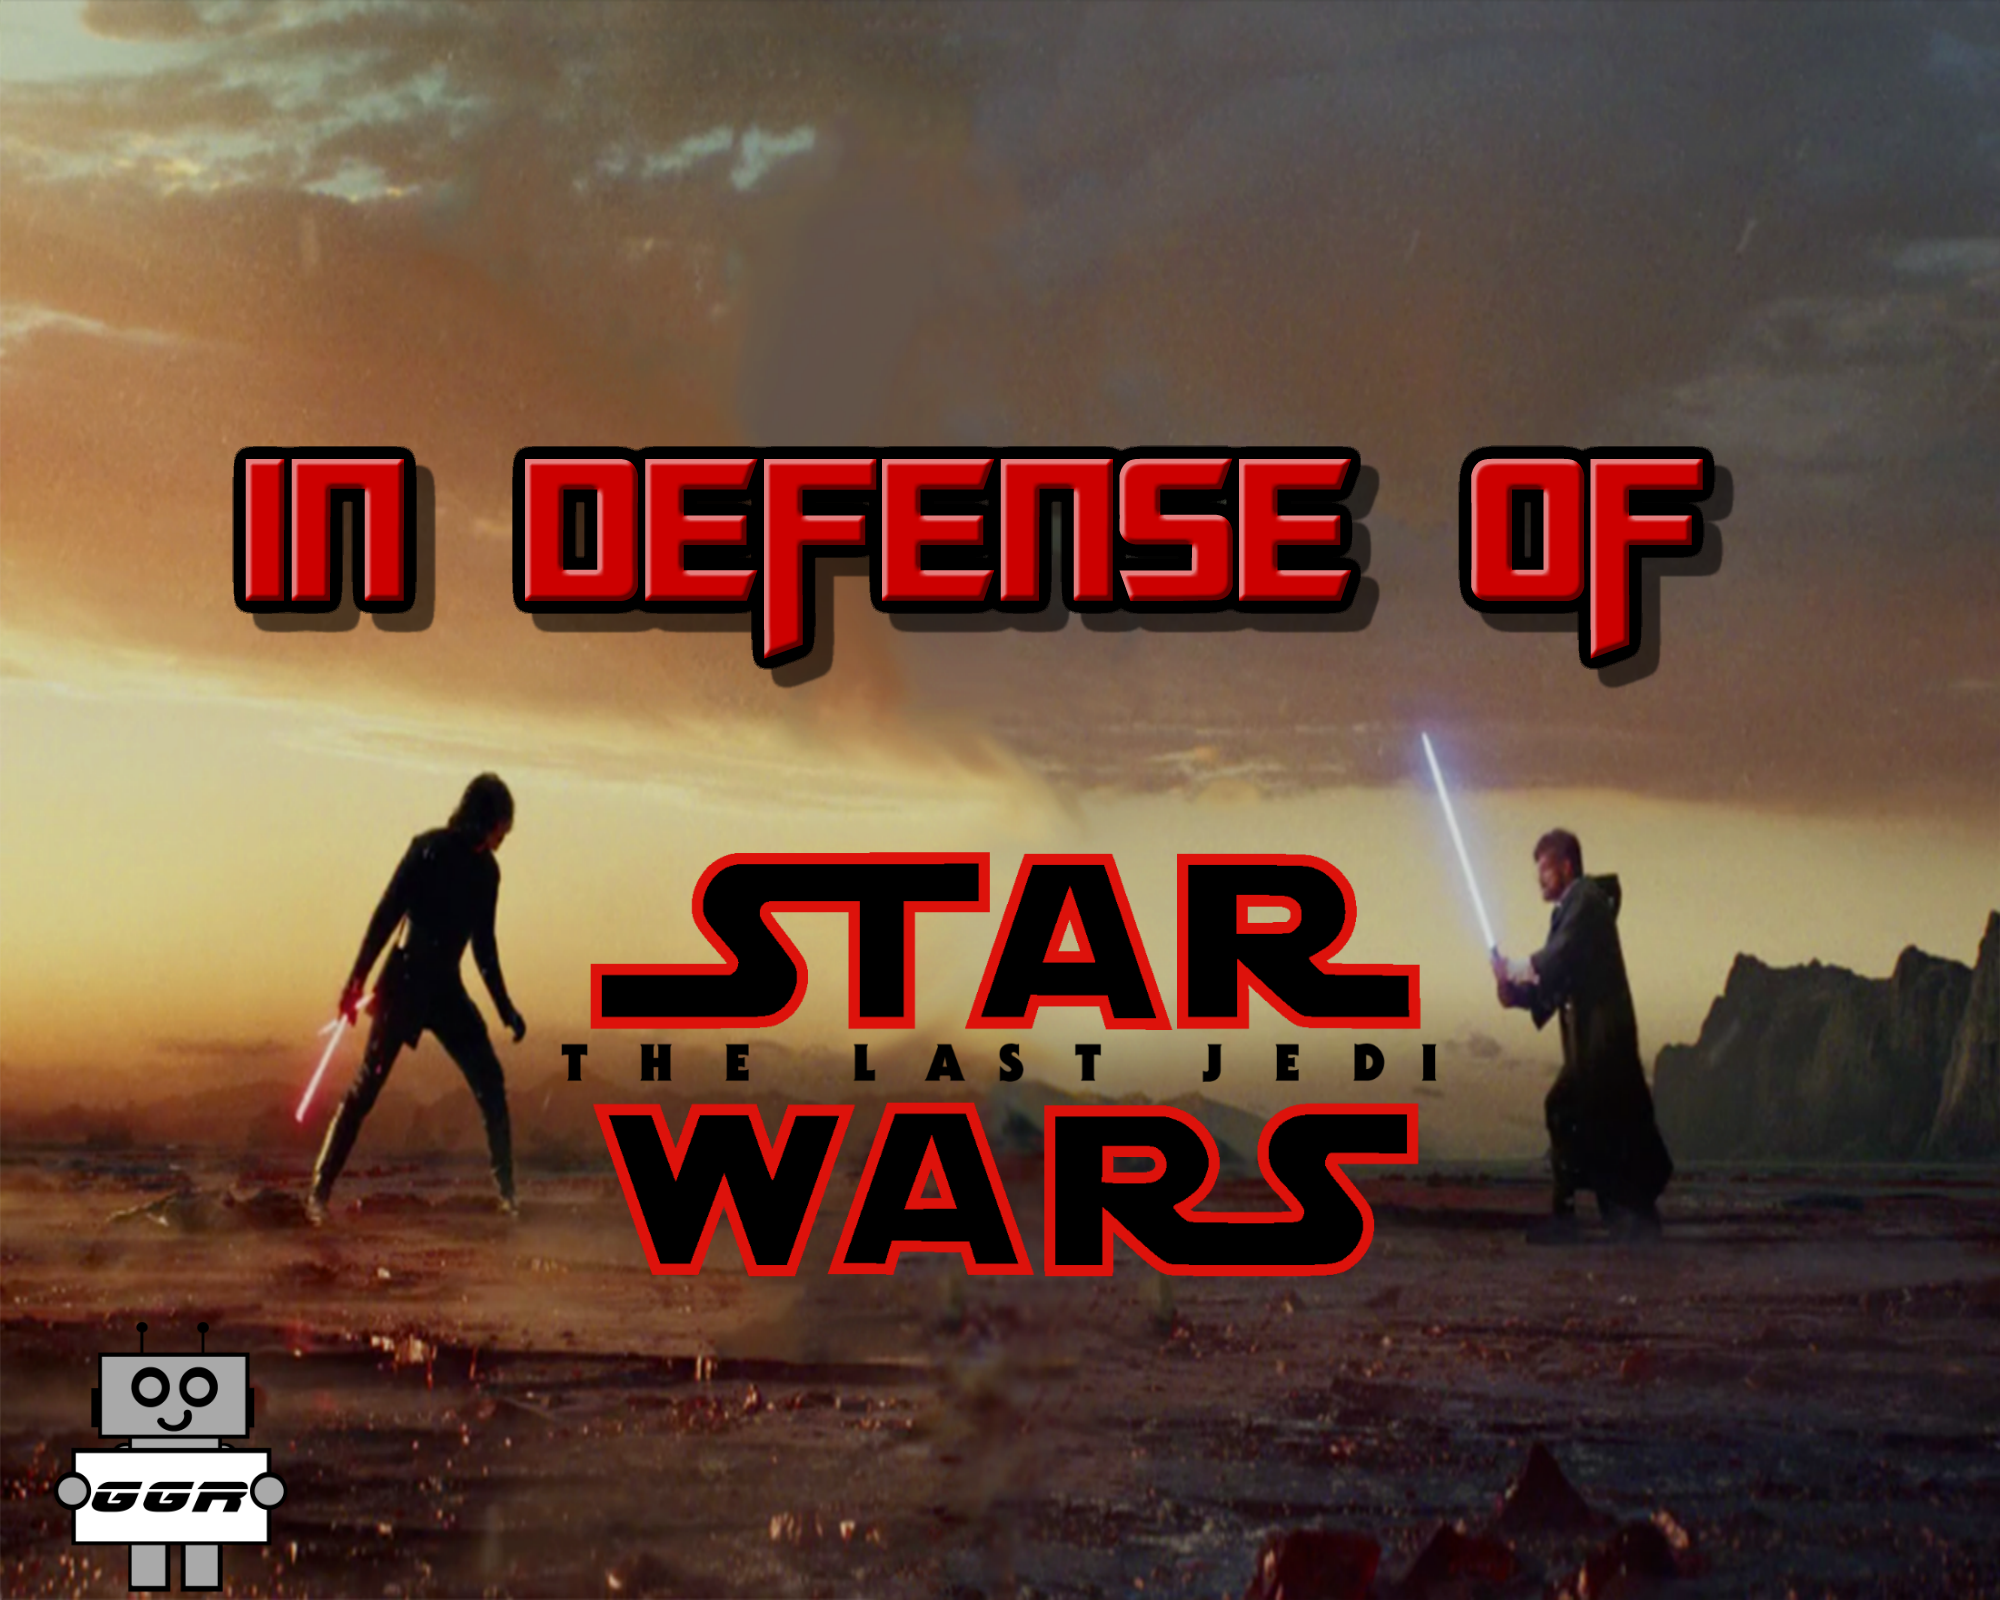 Star Wars The Last Jedi Review - HeyUGuys